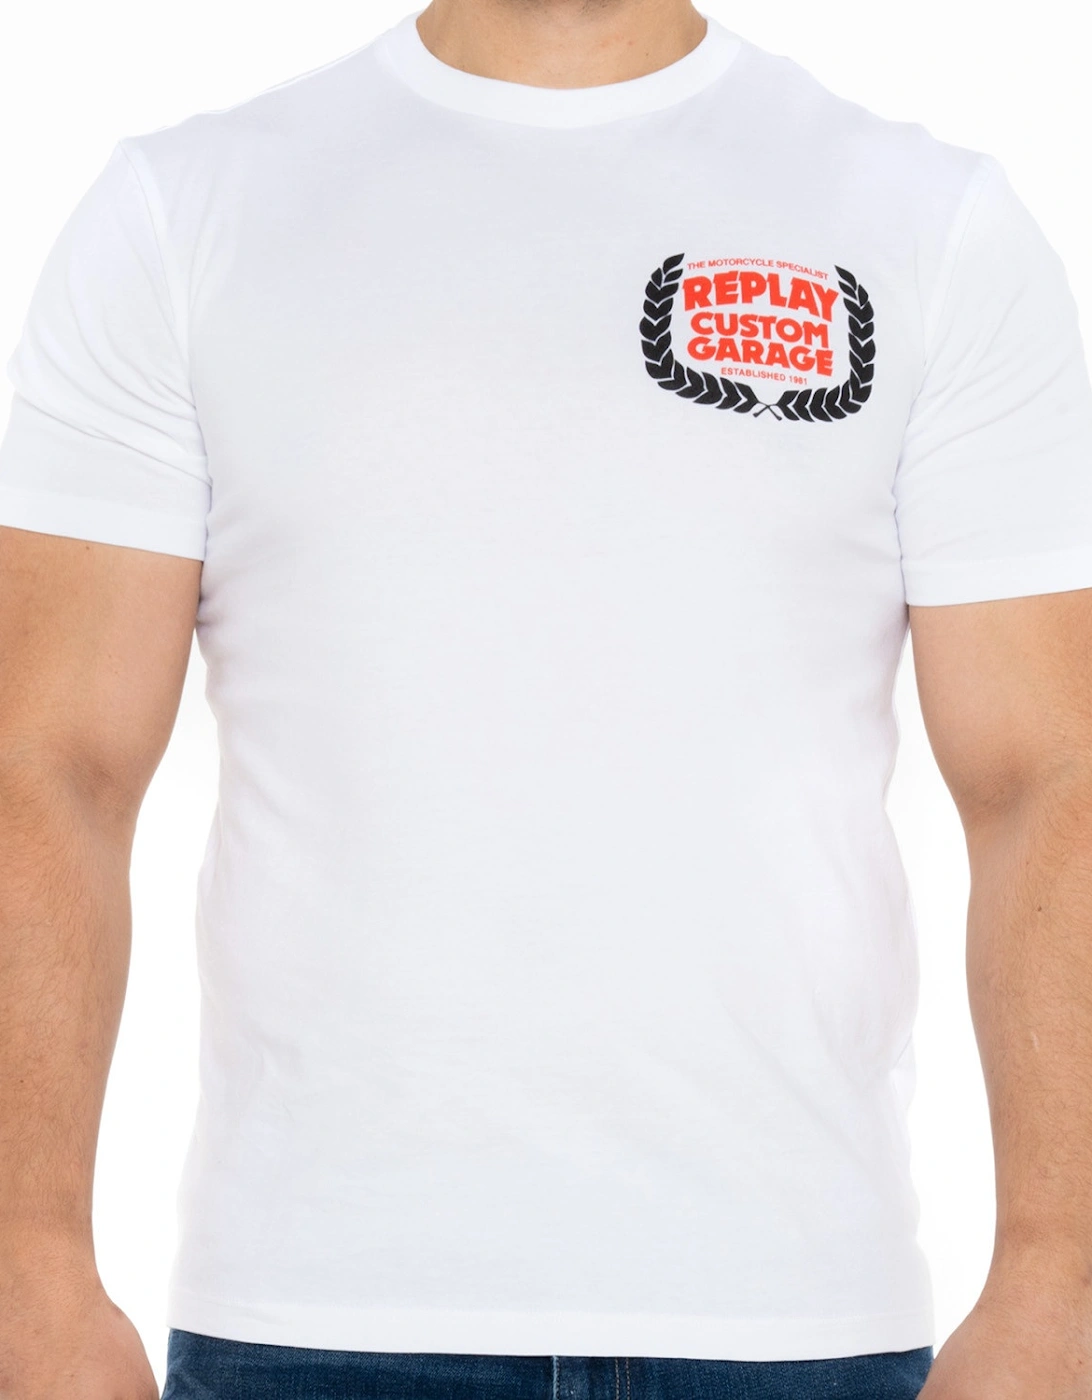 Mens Custom Garage T-Shirt (White), 8 of 7